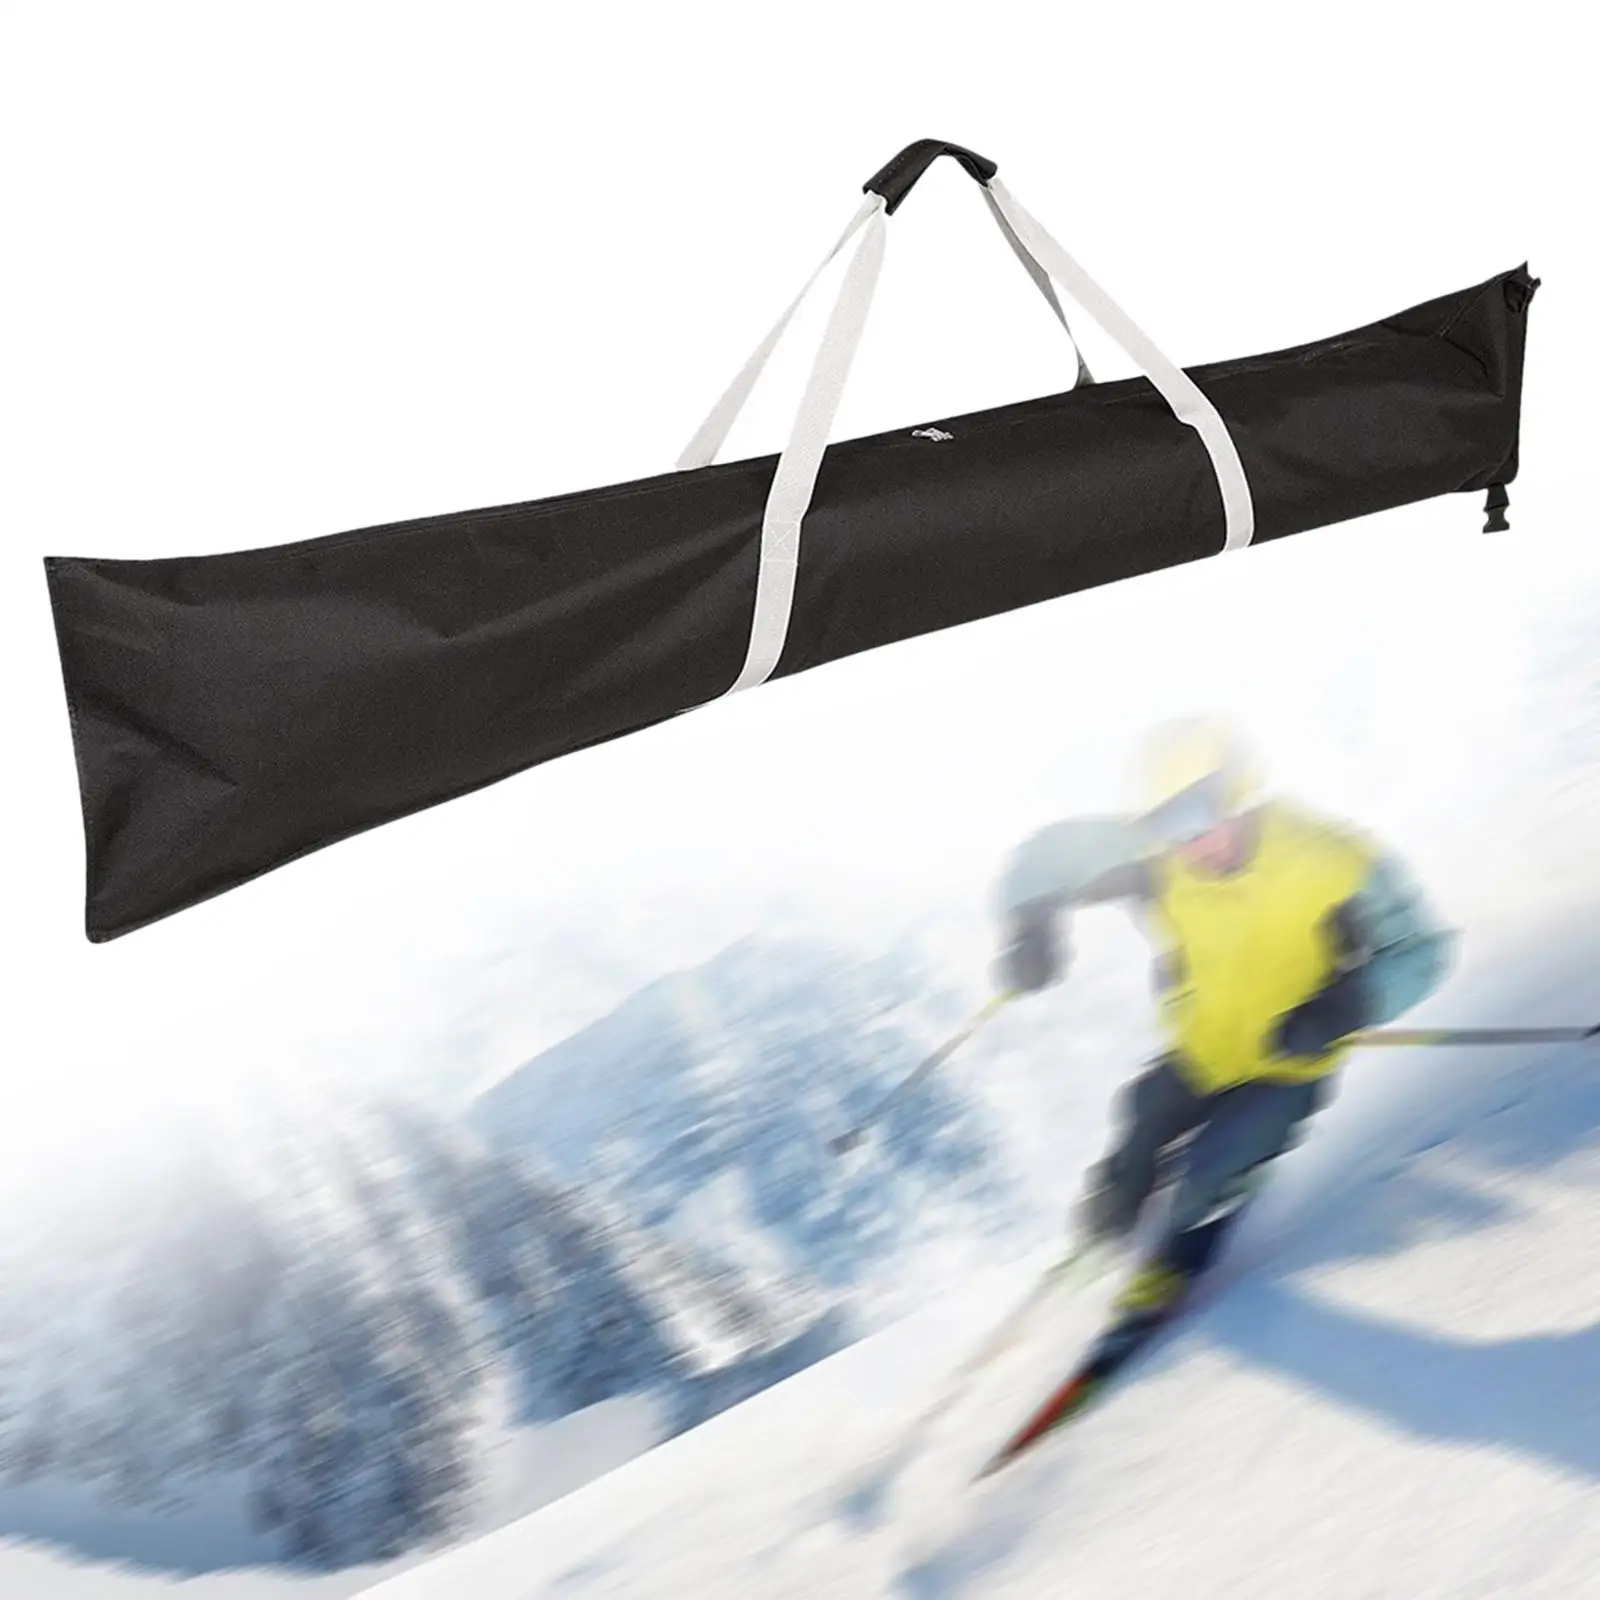 Ski Bag Protective with Handle Snowboard Equipment Transport Men Women Snowboards Poles Bag Ski Travel Bag for Winter Sports